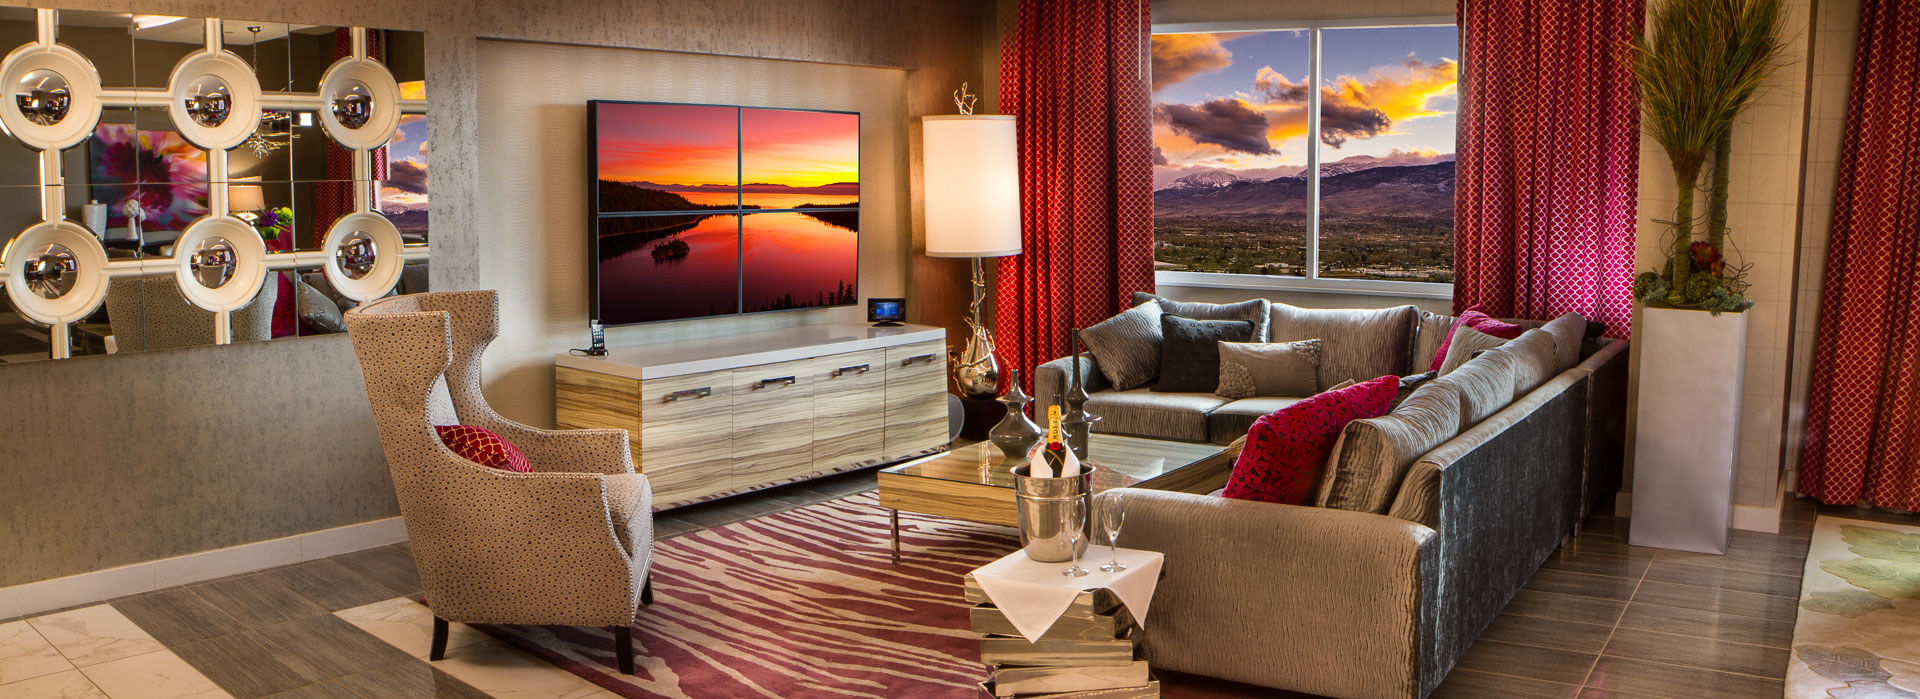 Reno Hotel Room Photography